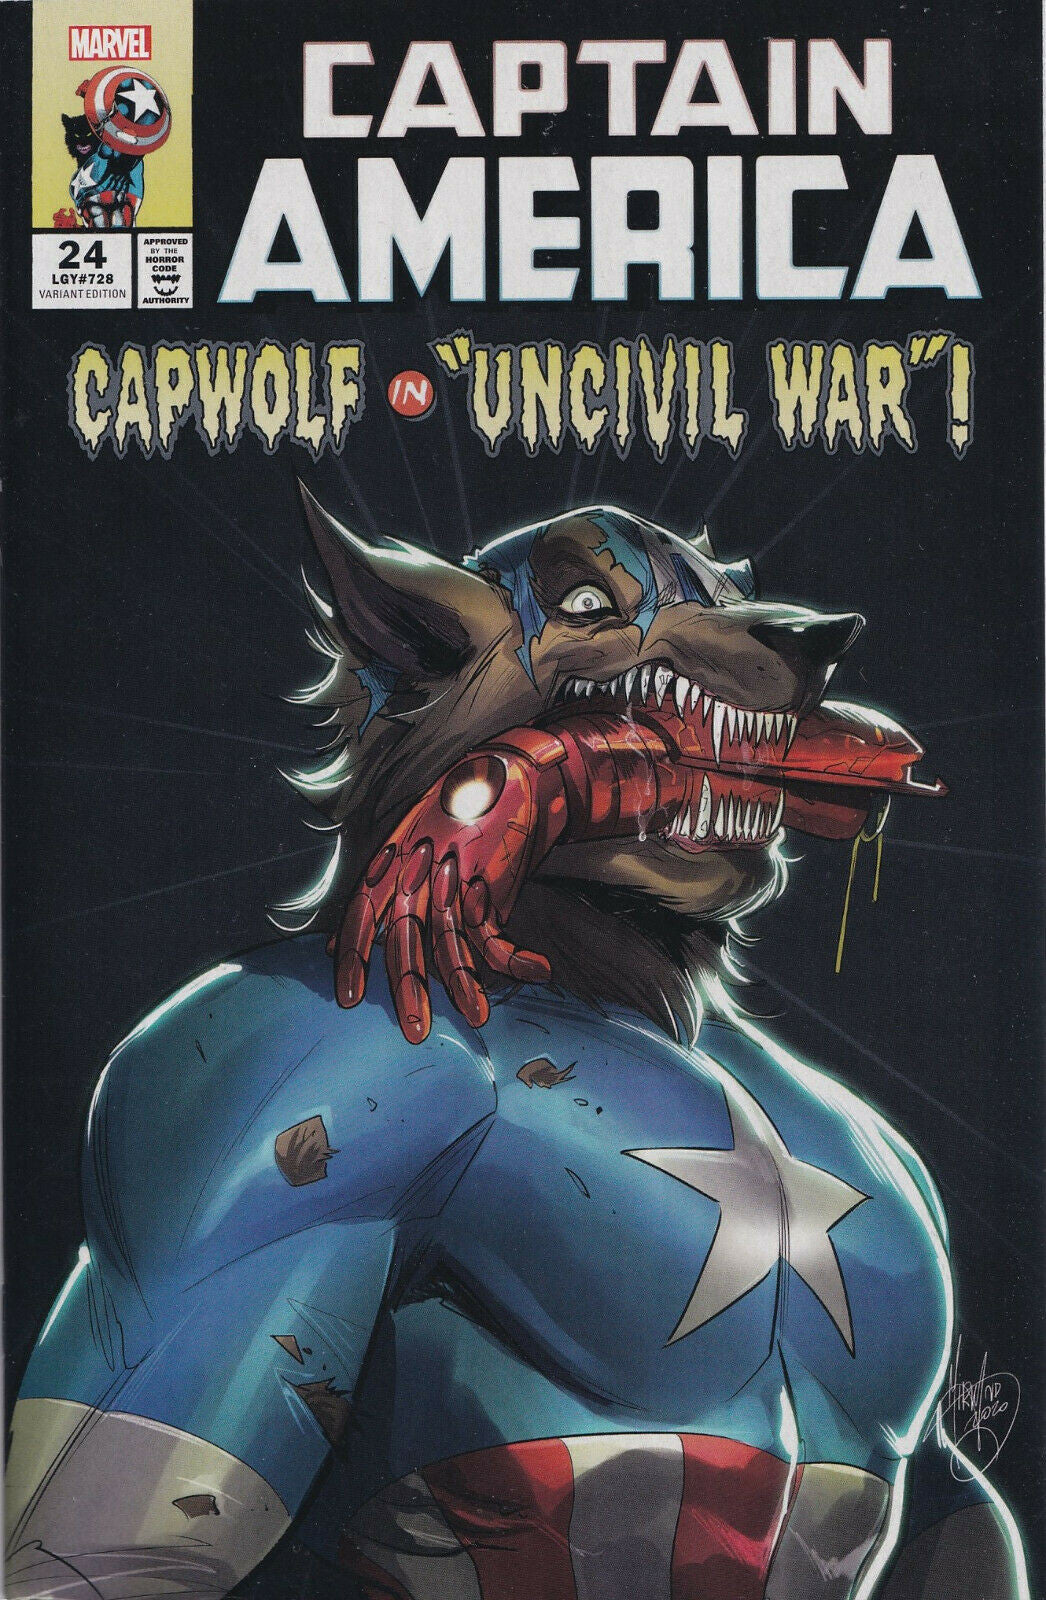 CAPTAIN AMERICA #24 (MIRKA ANDOLFO CAPWOLF VARIANT)(2020) Comic Book ~ Marvel